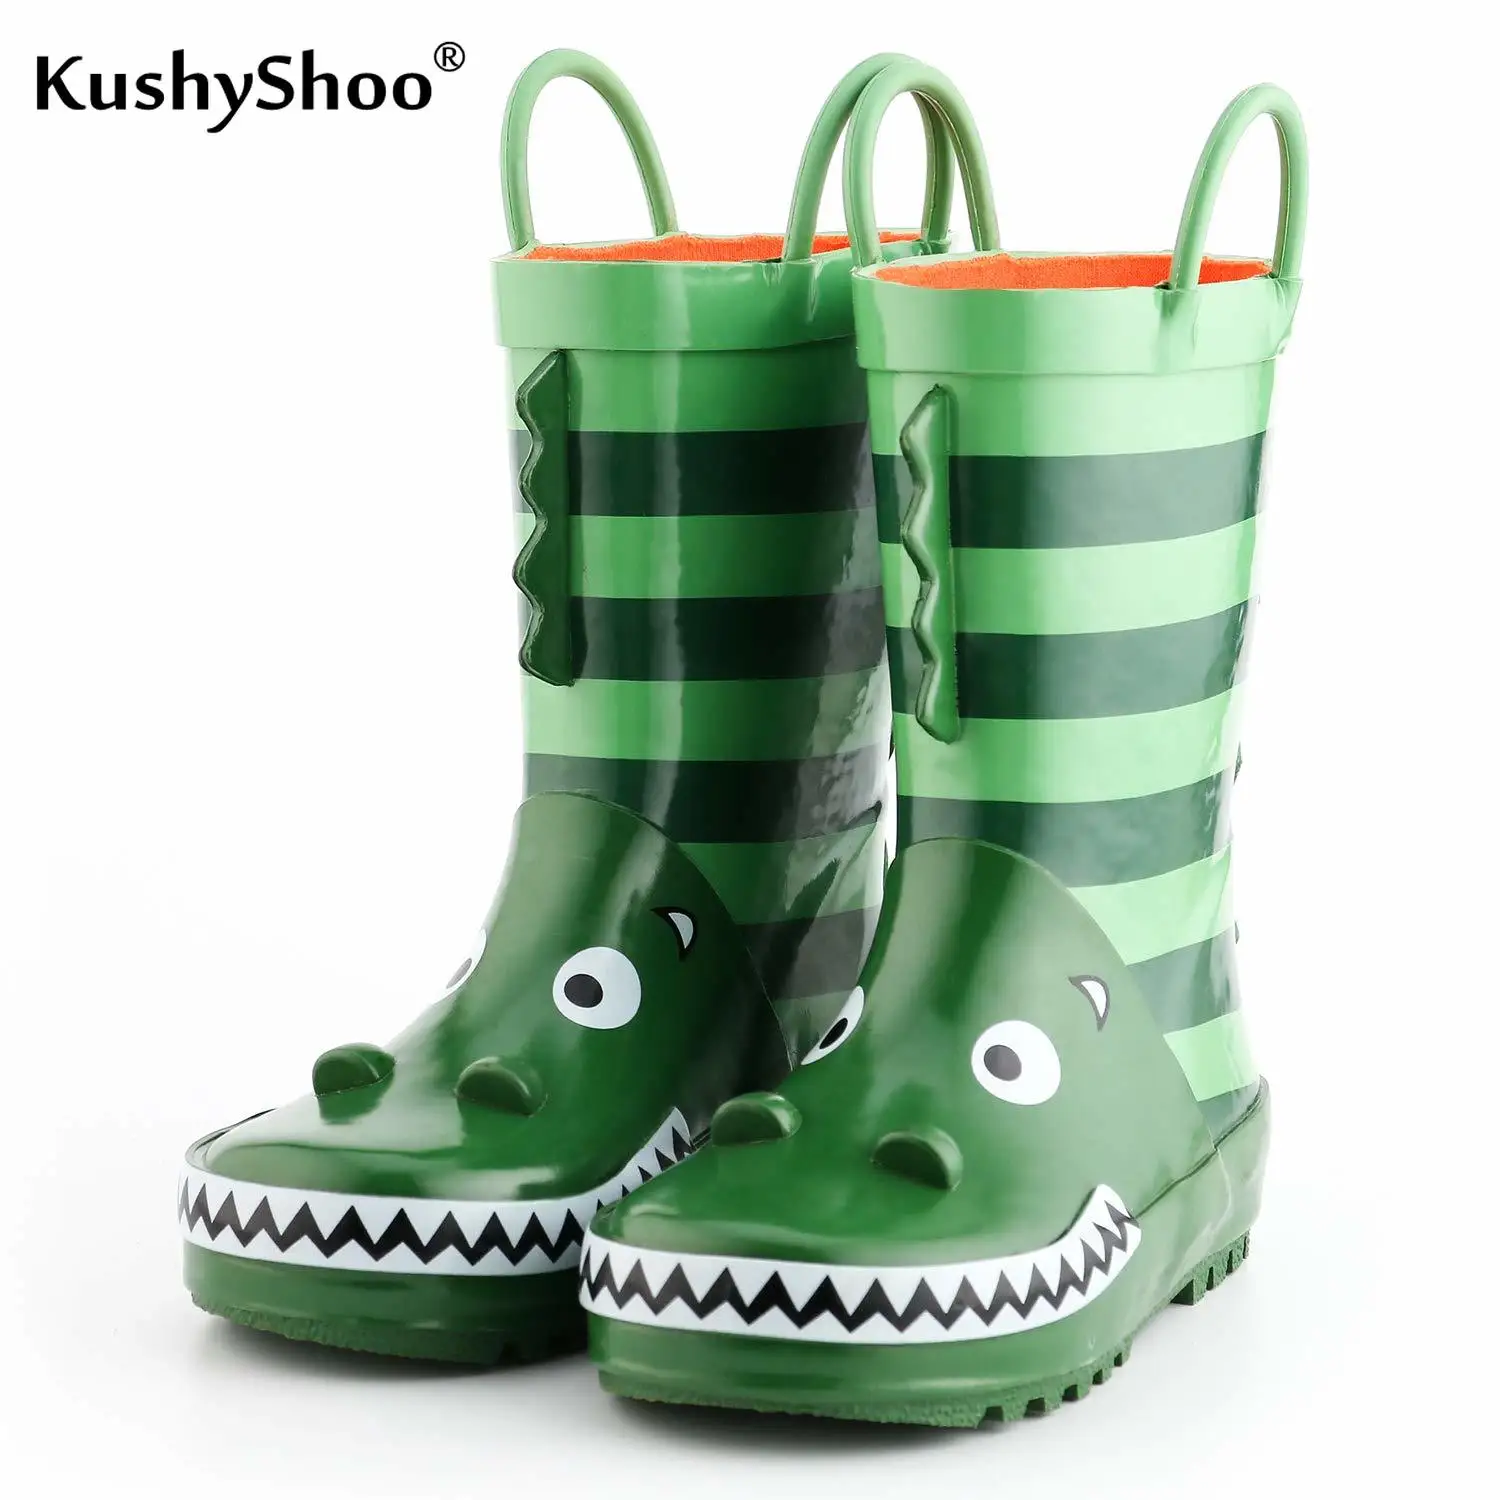 kushyshoo criancas botas de chuva menino botas de borracha padroes de crocodilo 3d adoravel criancas botas